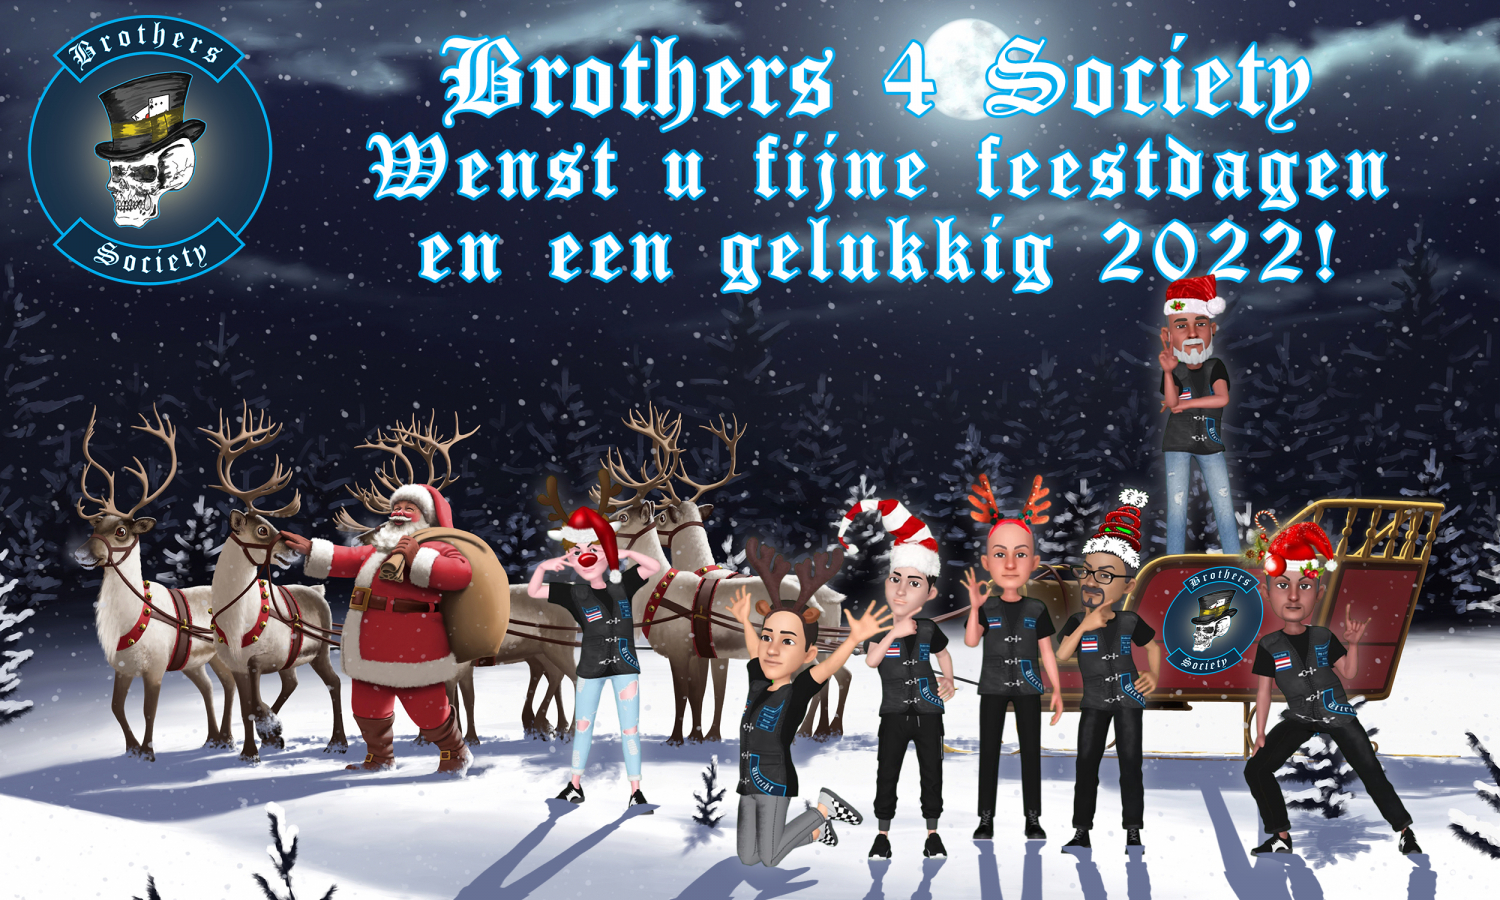 Brothers4Society wenst U fijne feestdagen